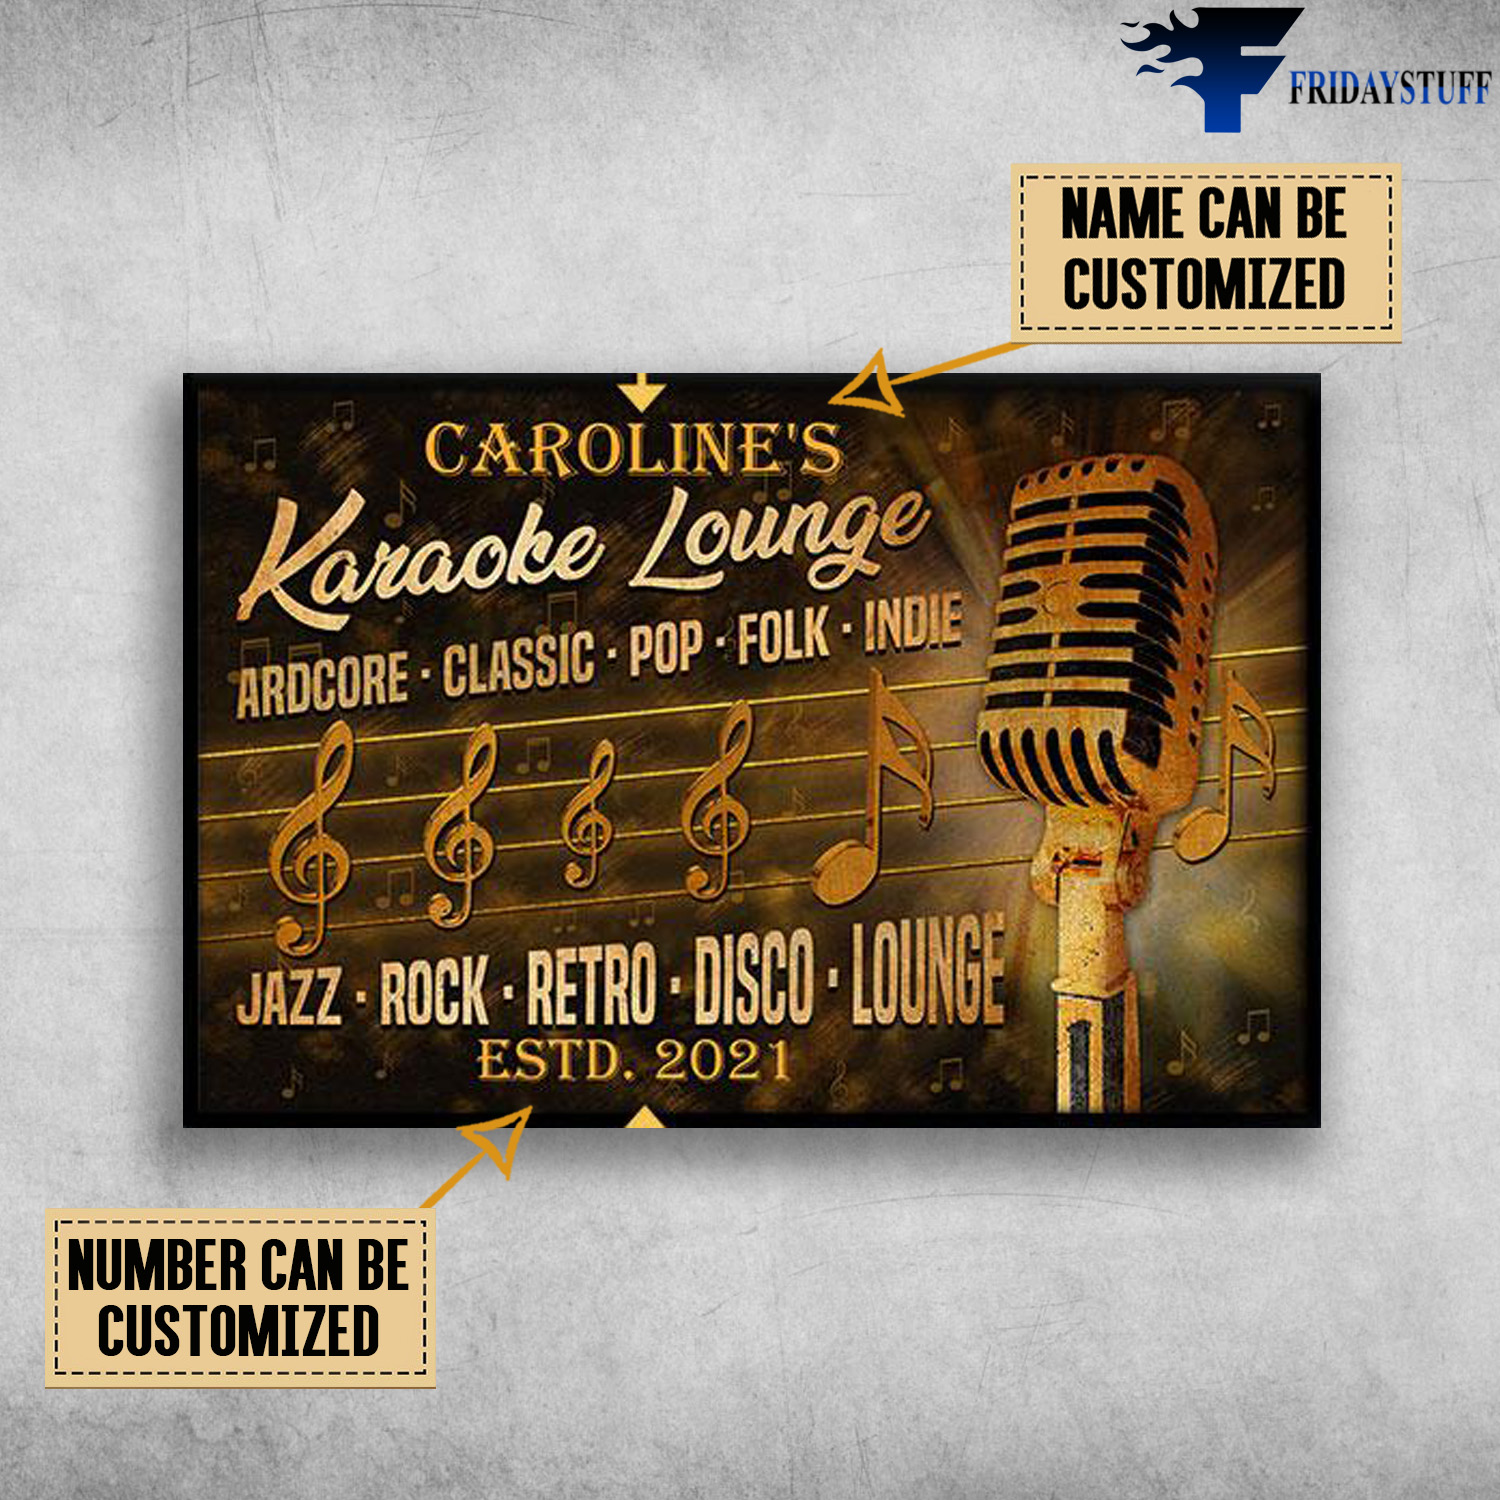 Wijzer schroef Geroosterd Karaoke Lounge, Ardcore, Classic, Pop, Folk, Indie, Jazz, Rock, Retro,  Disco, Lounge Customized Personalized NAME/YEARS - FridayStuff